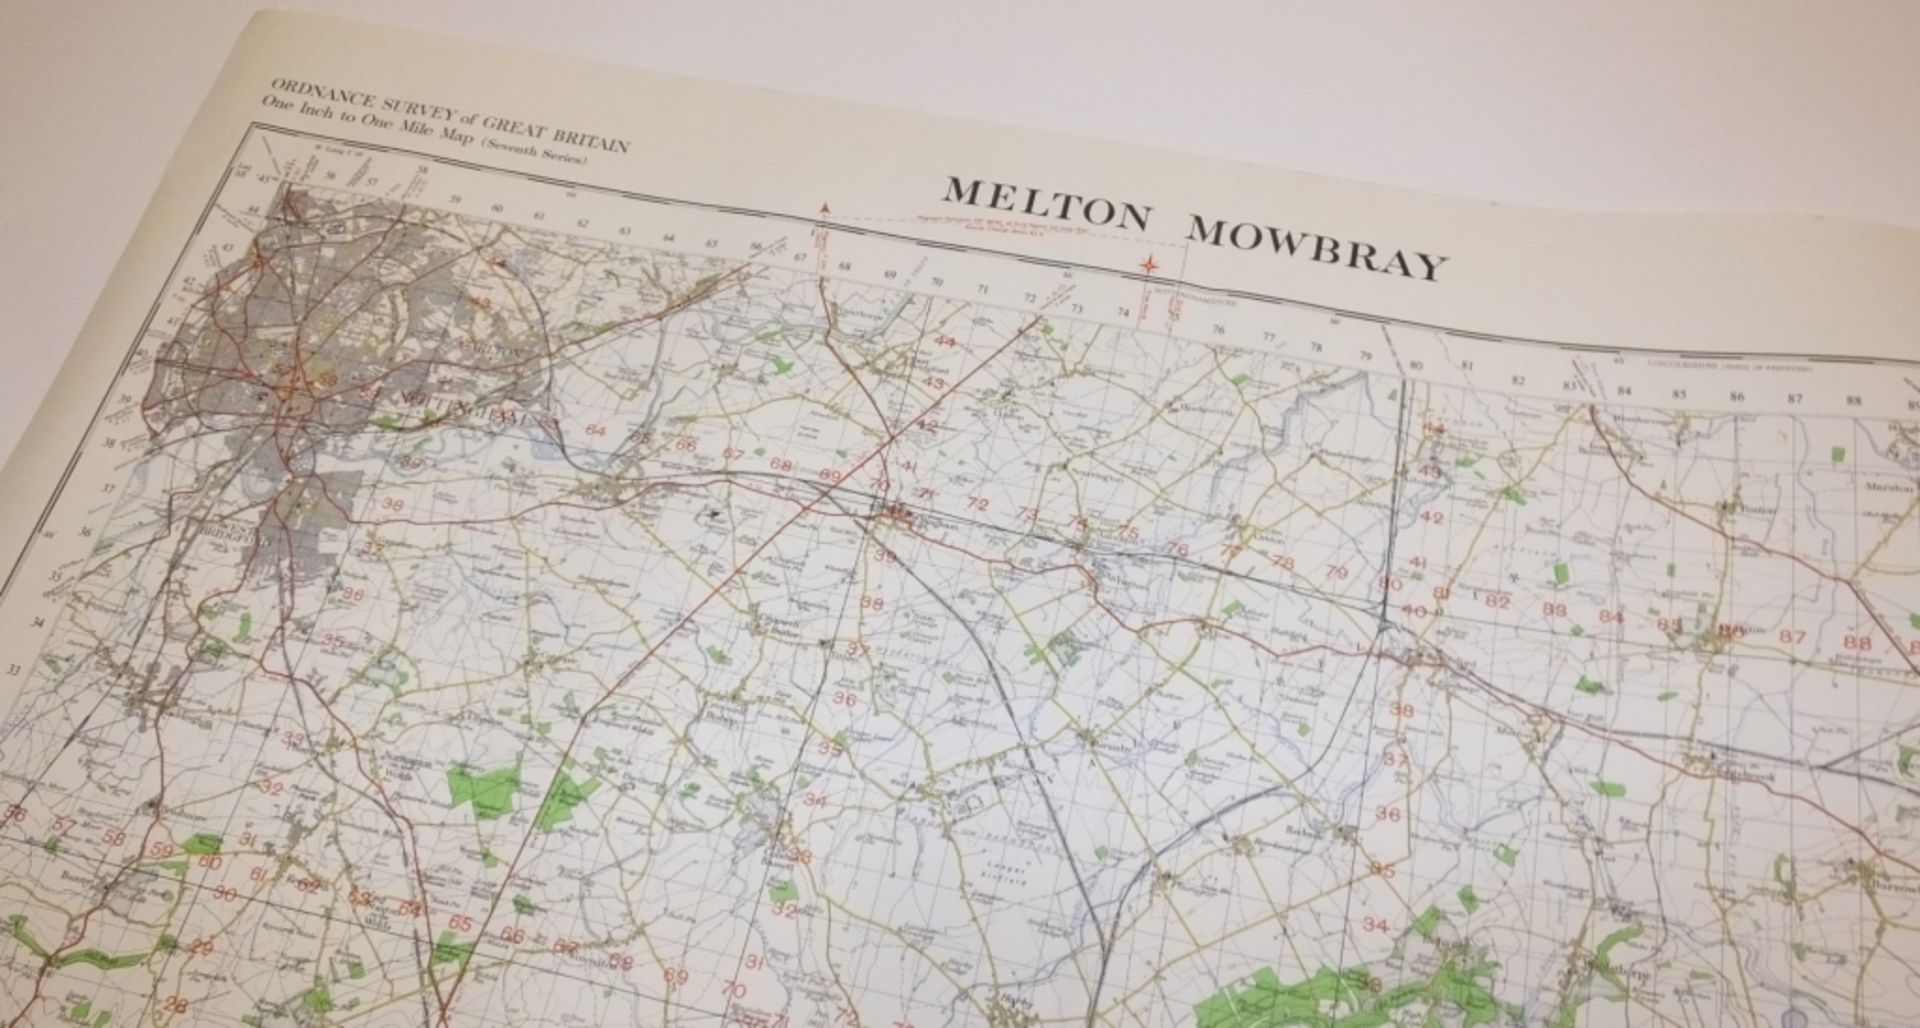 26x ENGLAND & WALES MAP MELTON MOWBRAY 1INCH 1MILE 1961 7TH SERIES 3GSGS SHEET 122 - Bild 2 aus 4